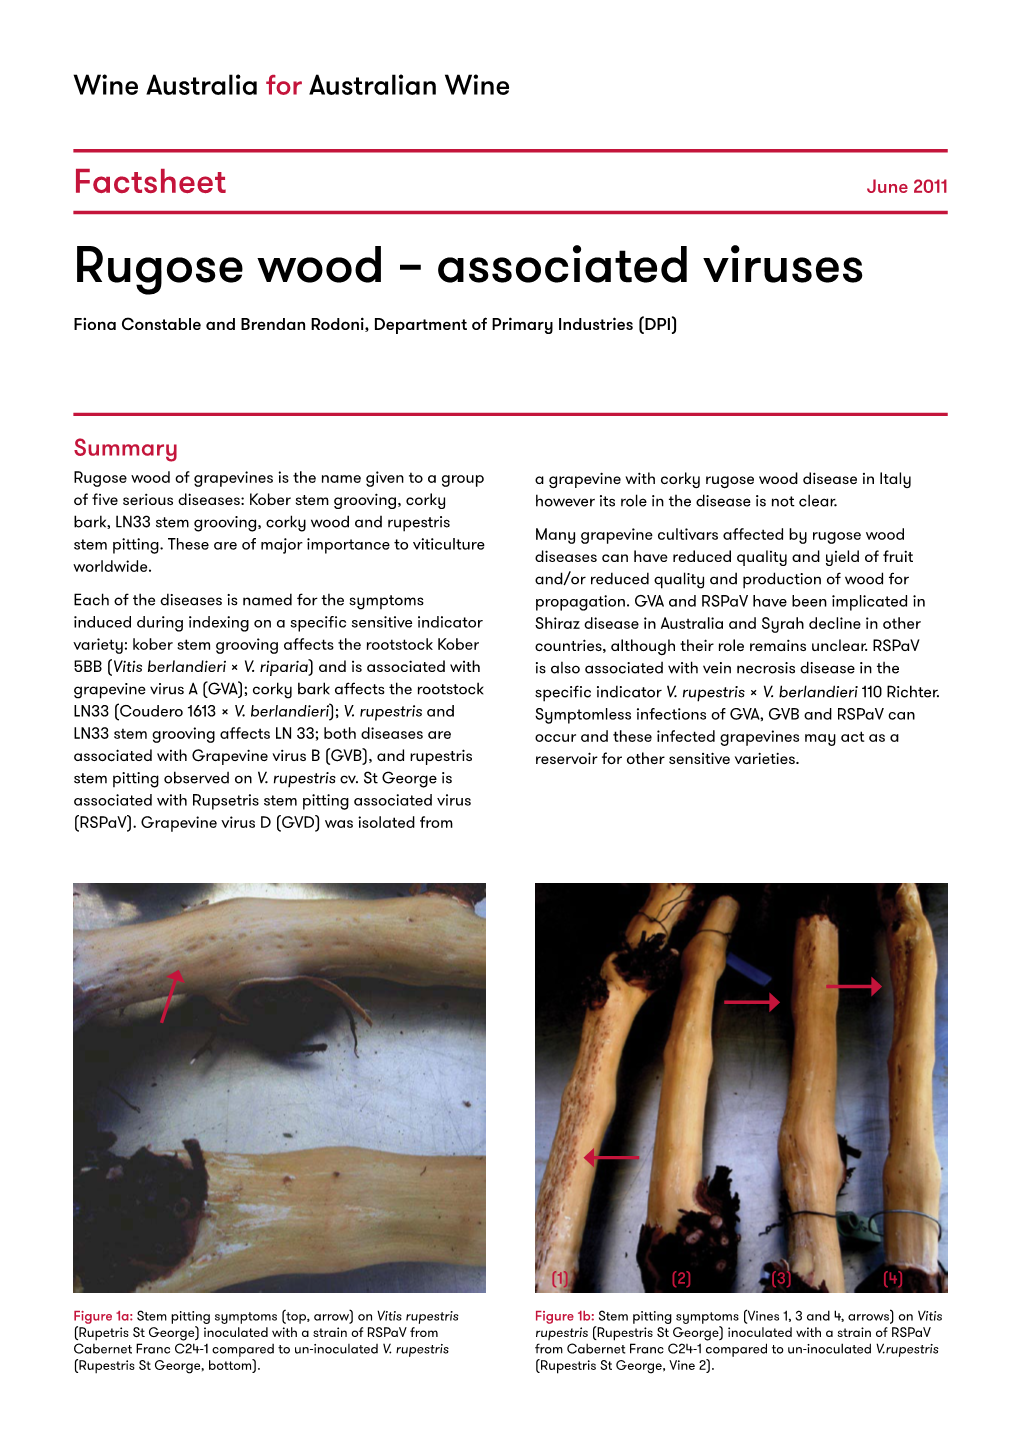 Rugose Wood – Associated Viruses